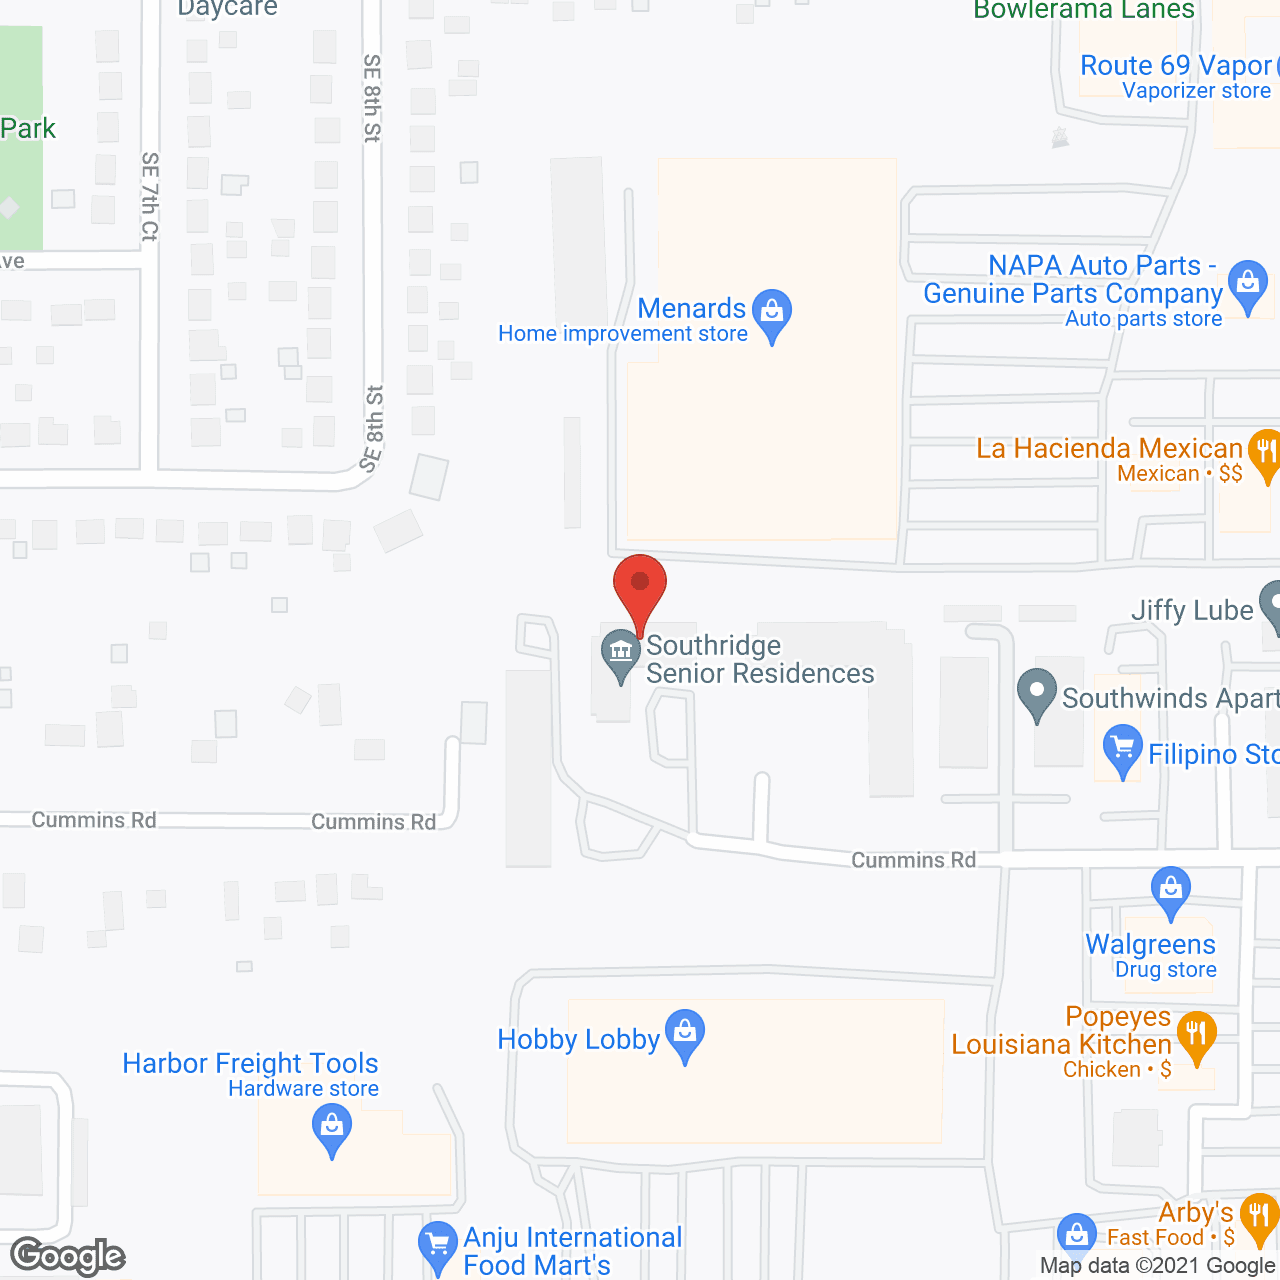 Southridge Senior Residences in google map